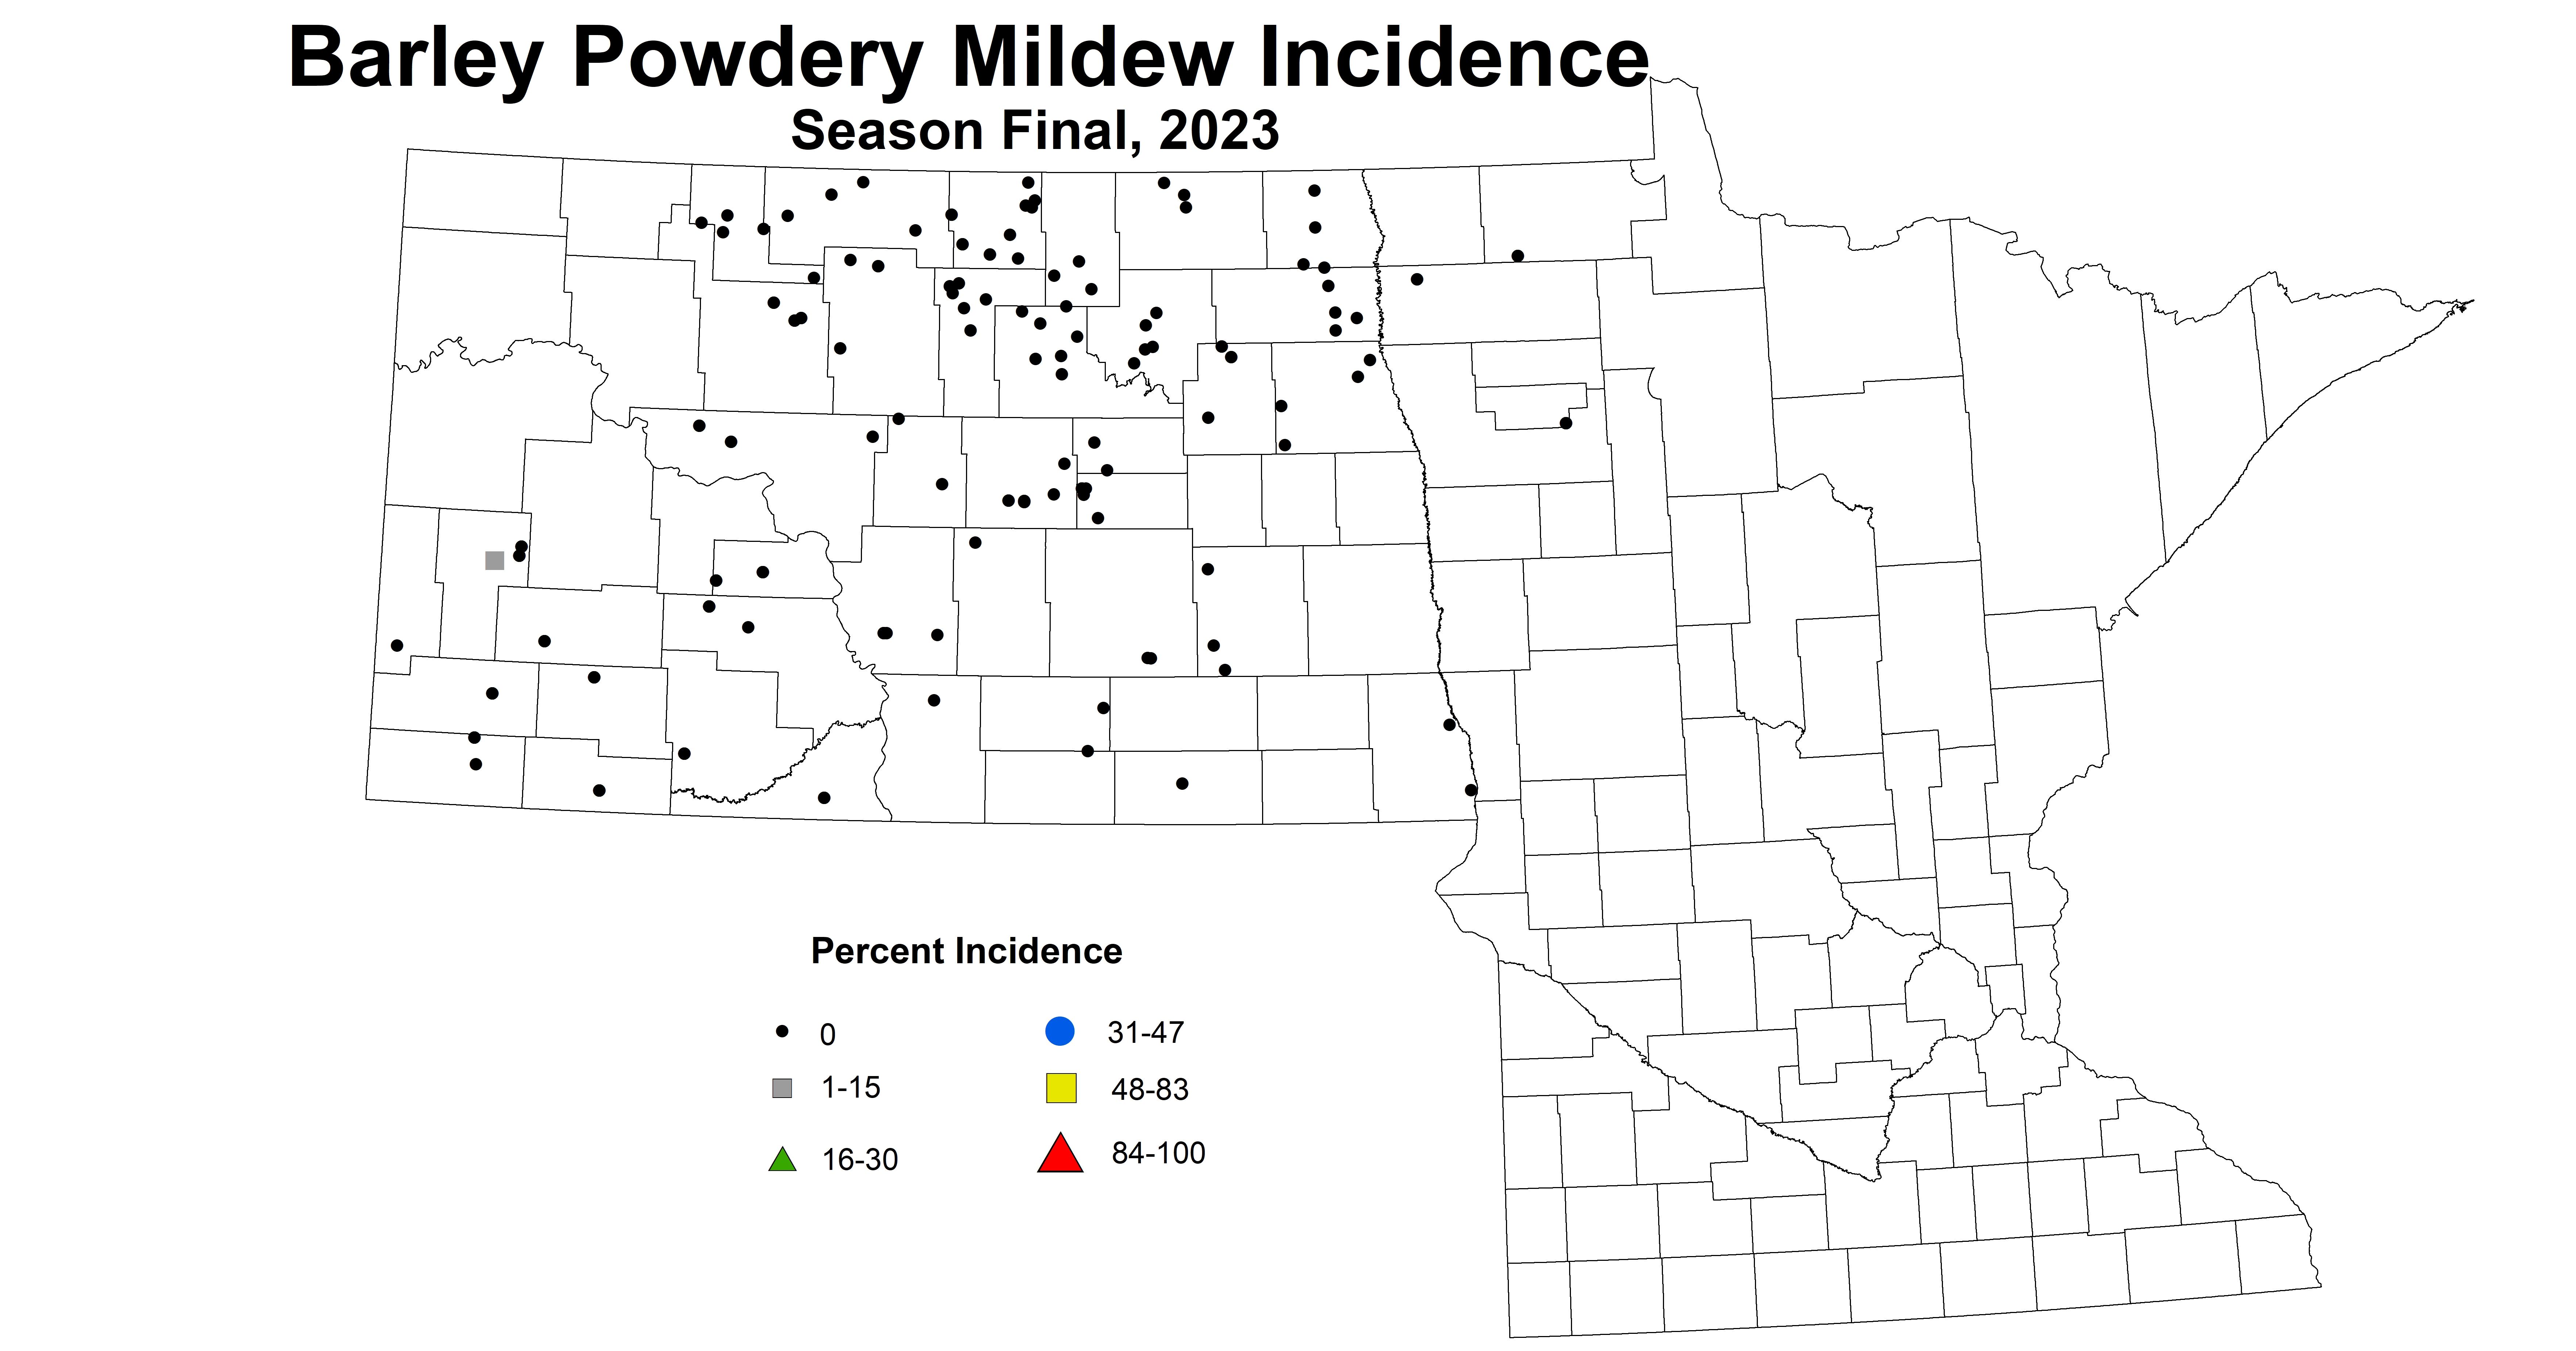 barley powdery mildew incidence season final 2023